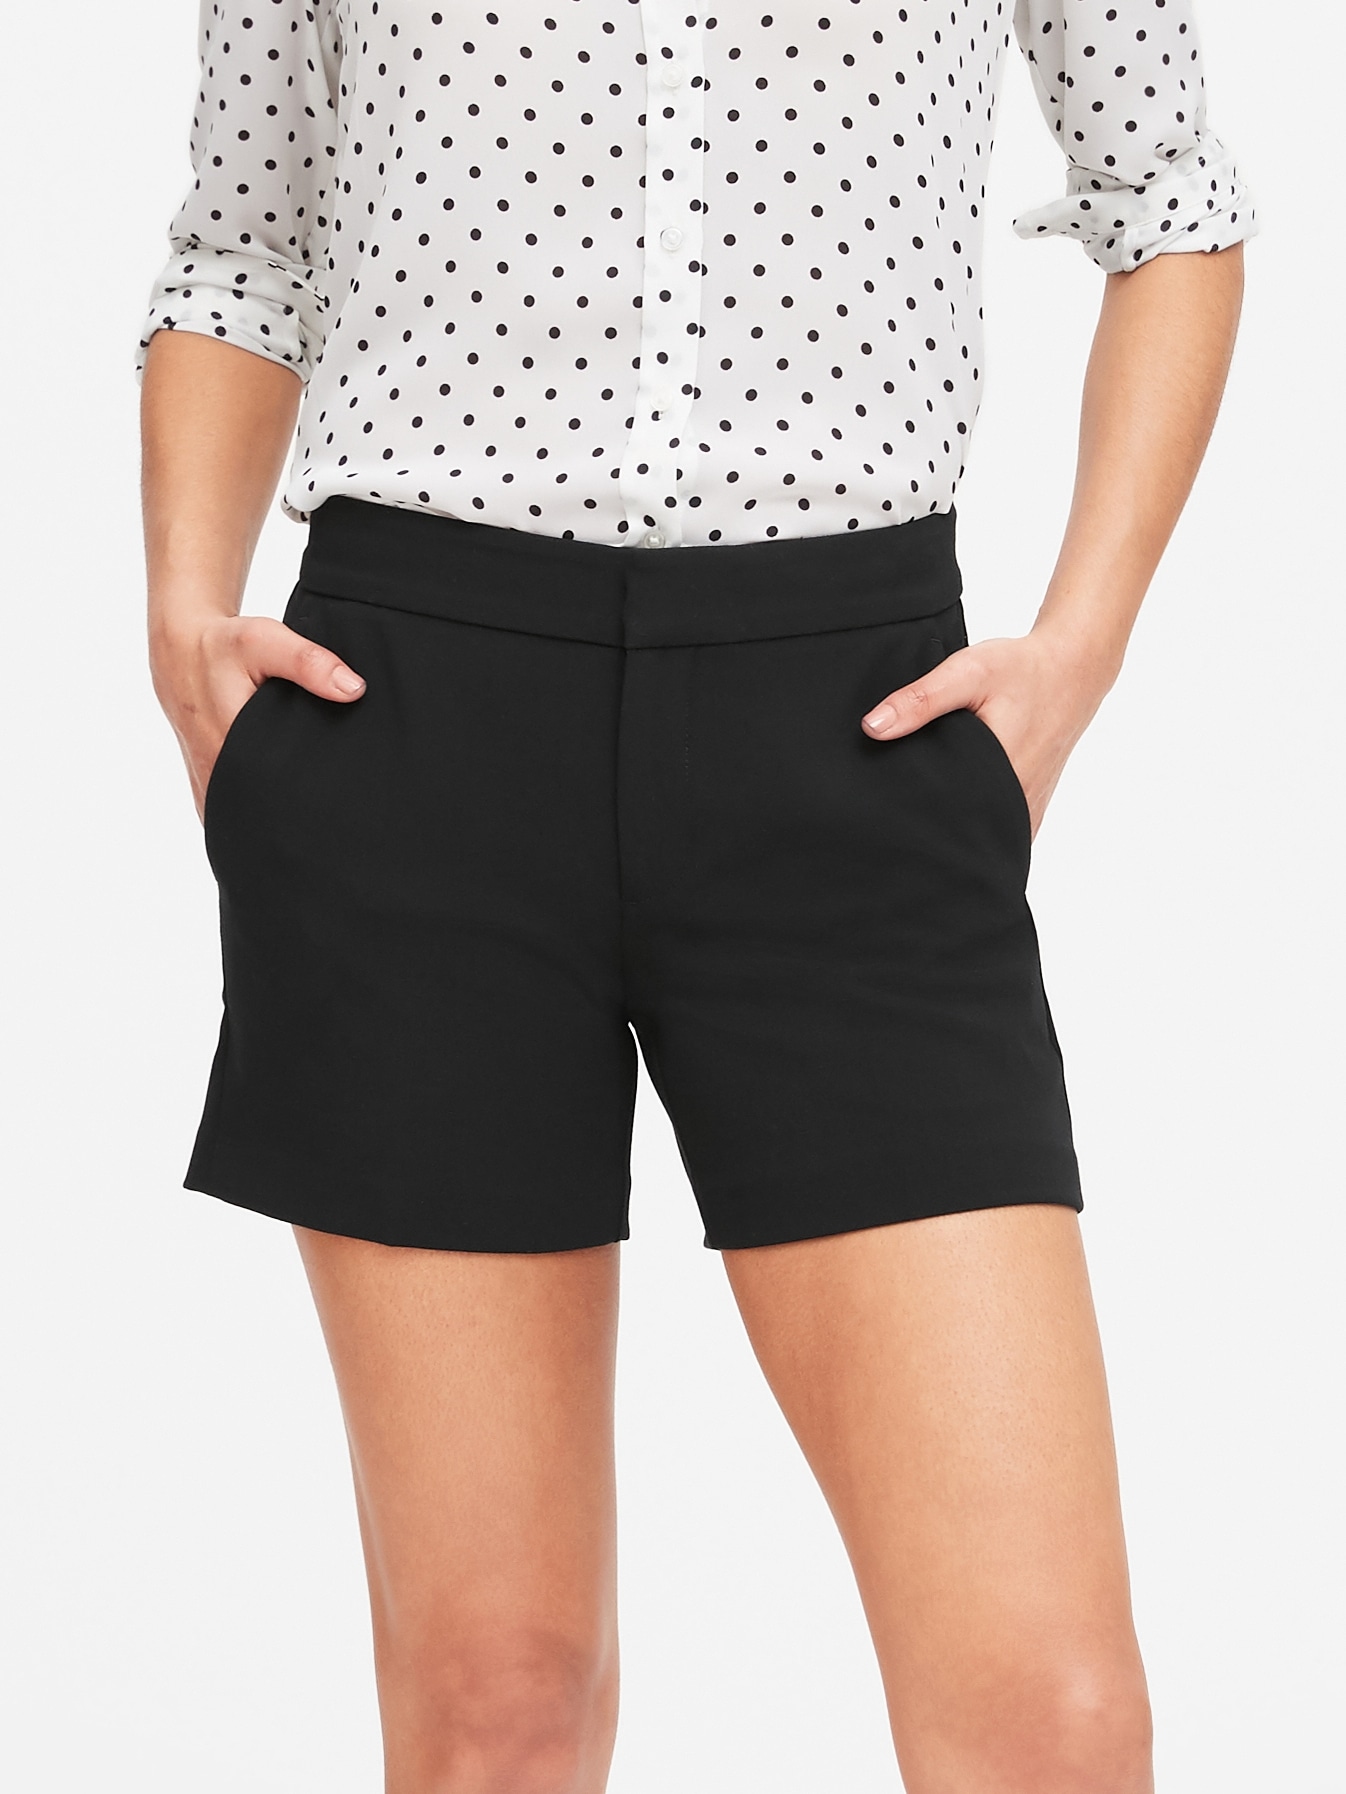 Comfy Shorts 5 - Black - Rise